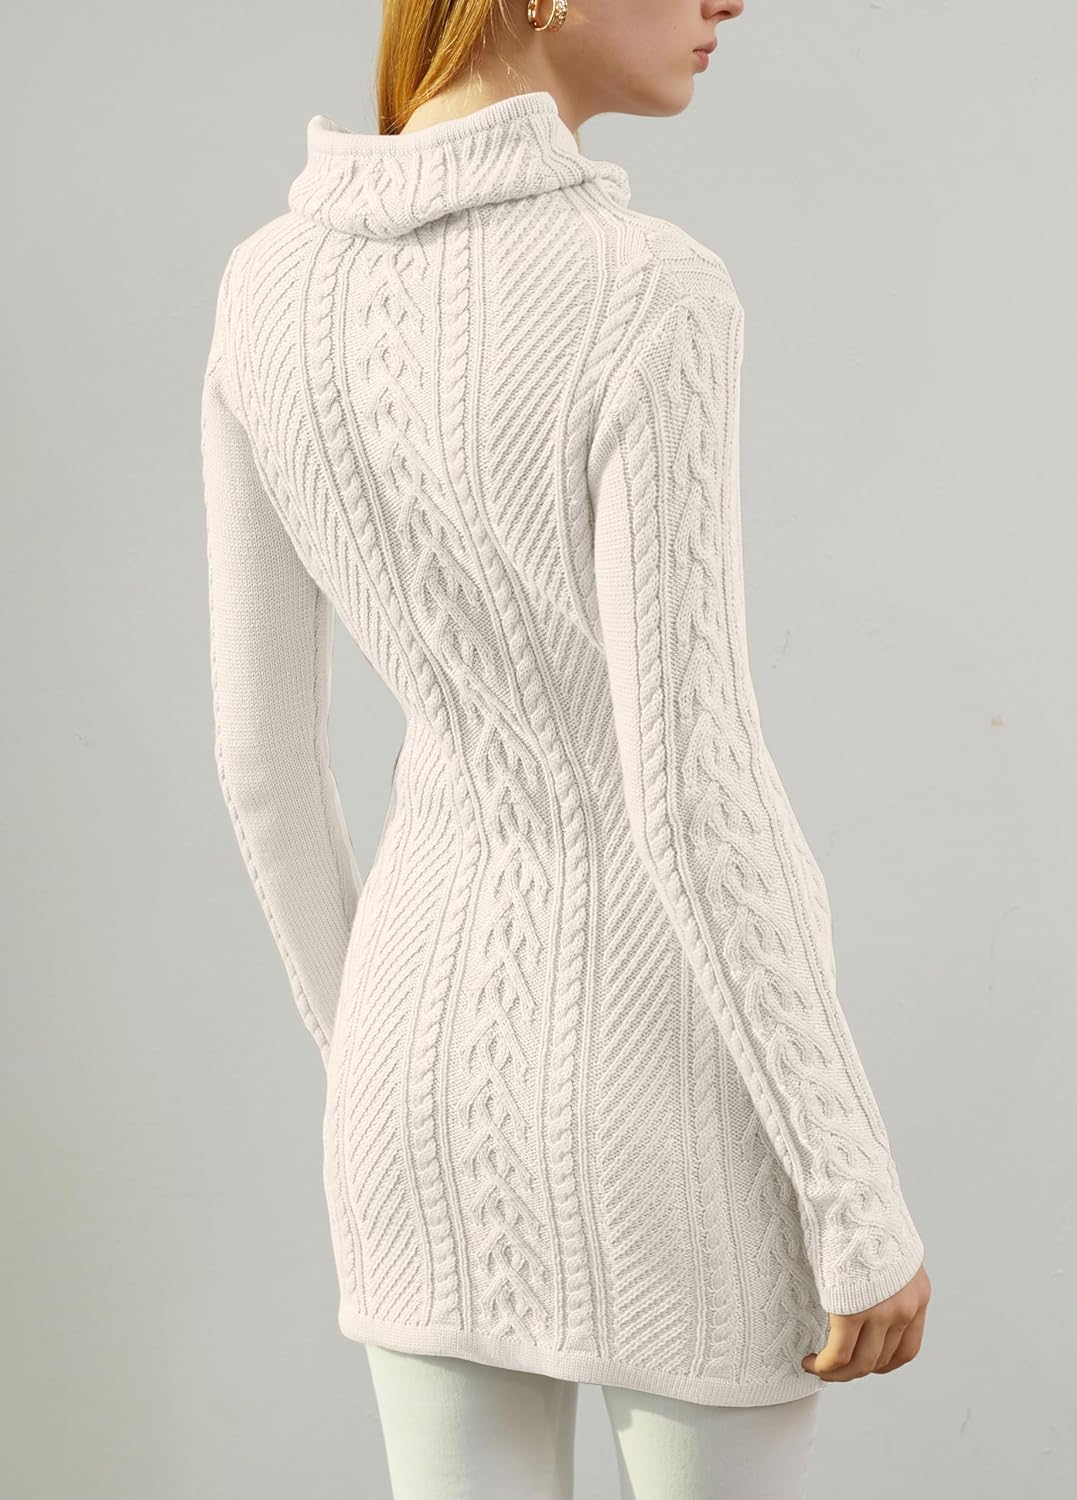 v28 Women Polo Neck Turtleneck Knit Stretchable Elasticity Long Slim Sweater, Cream White, Medium